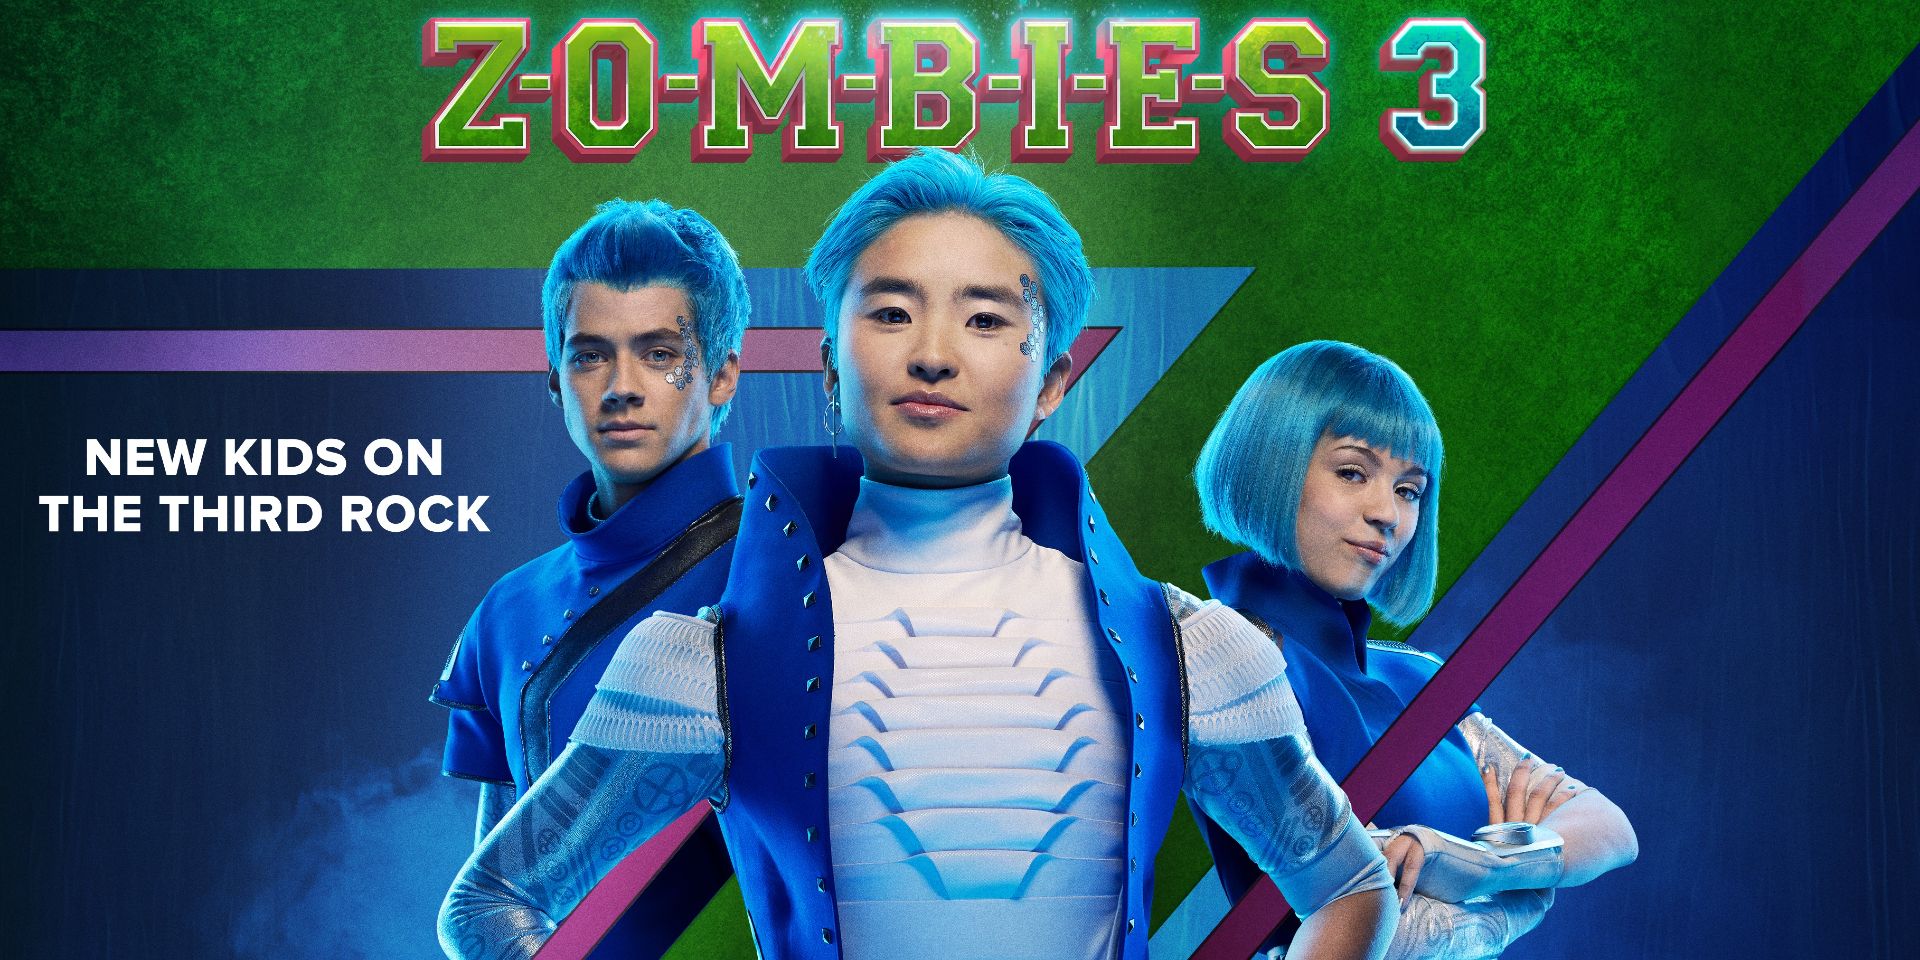 Casting News: Disney Announces New 'Zombies 3 'Cast Members